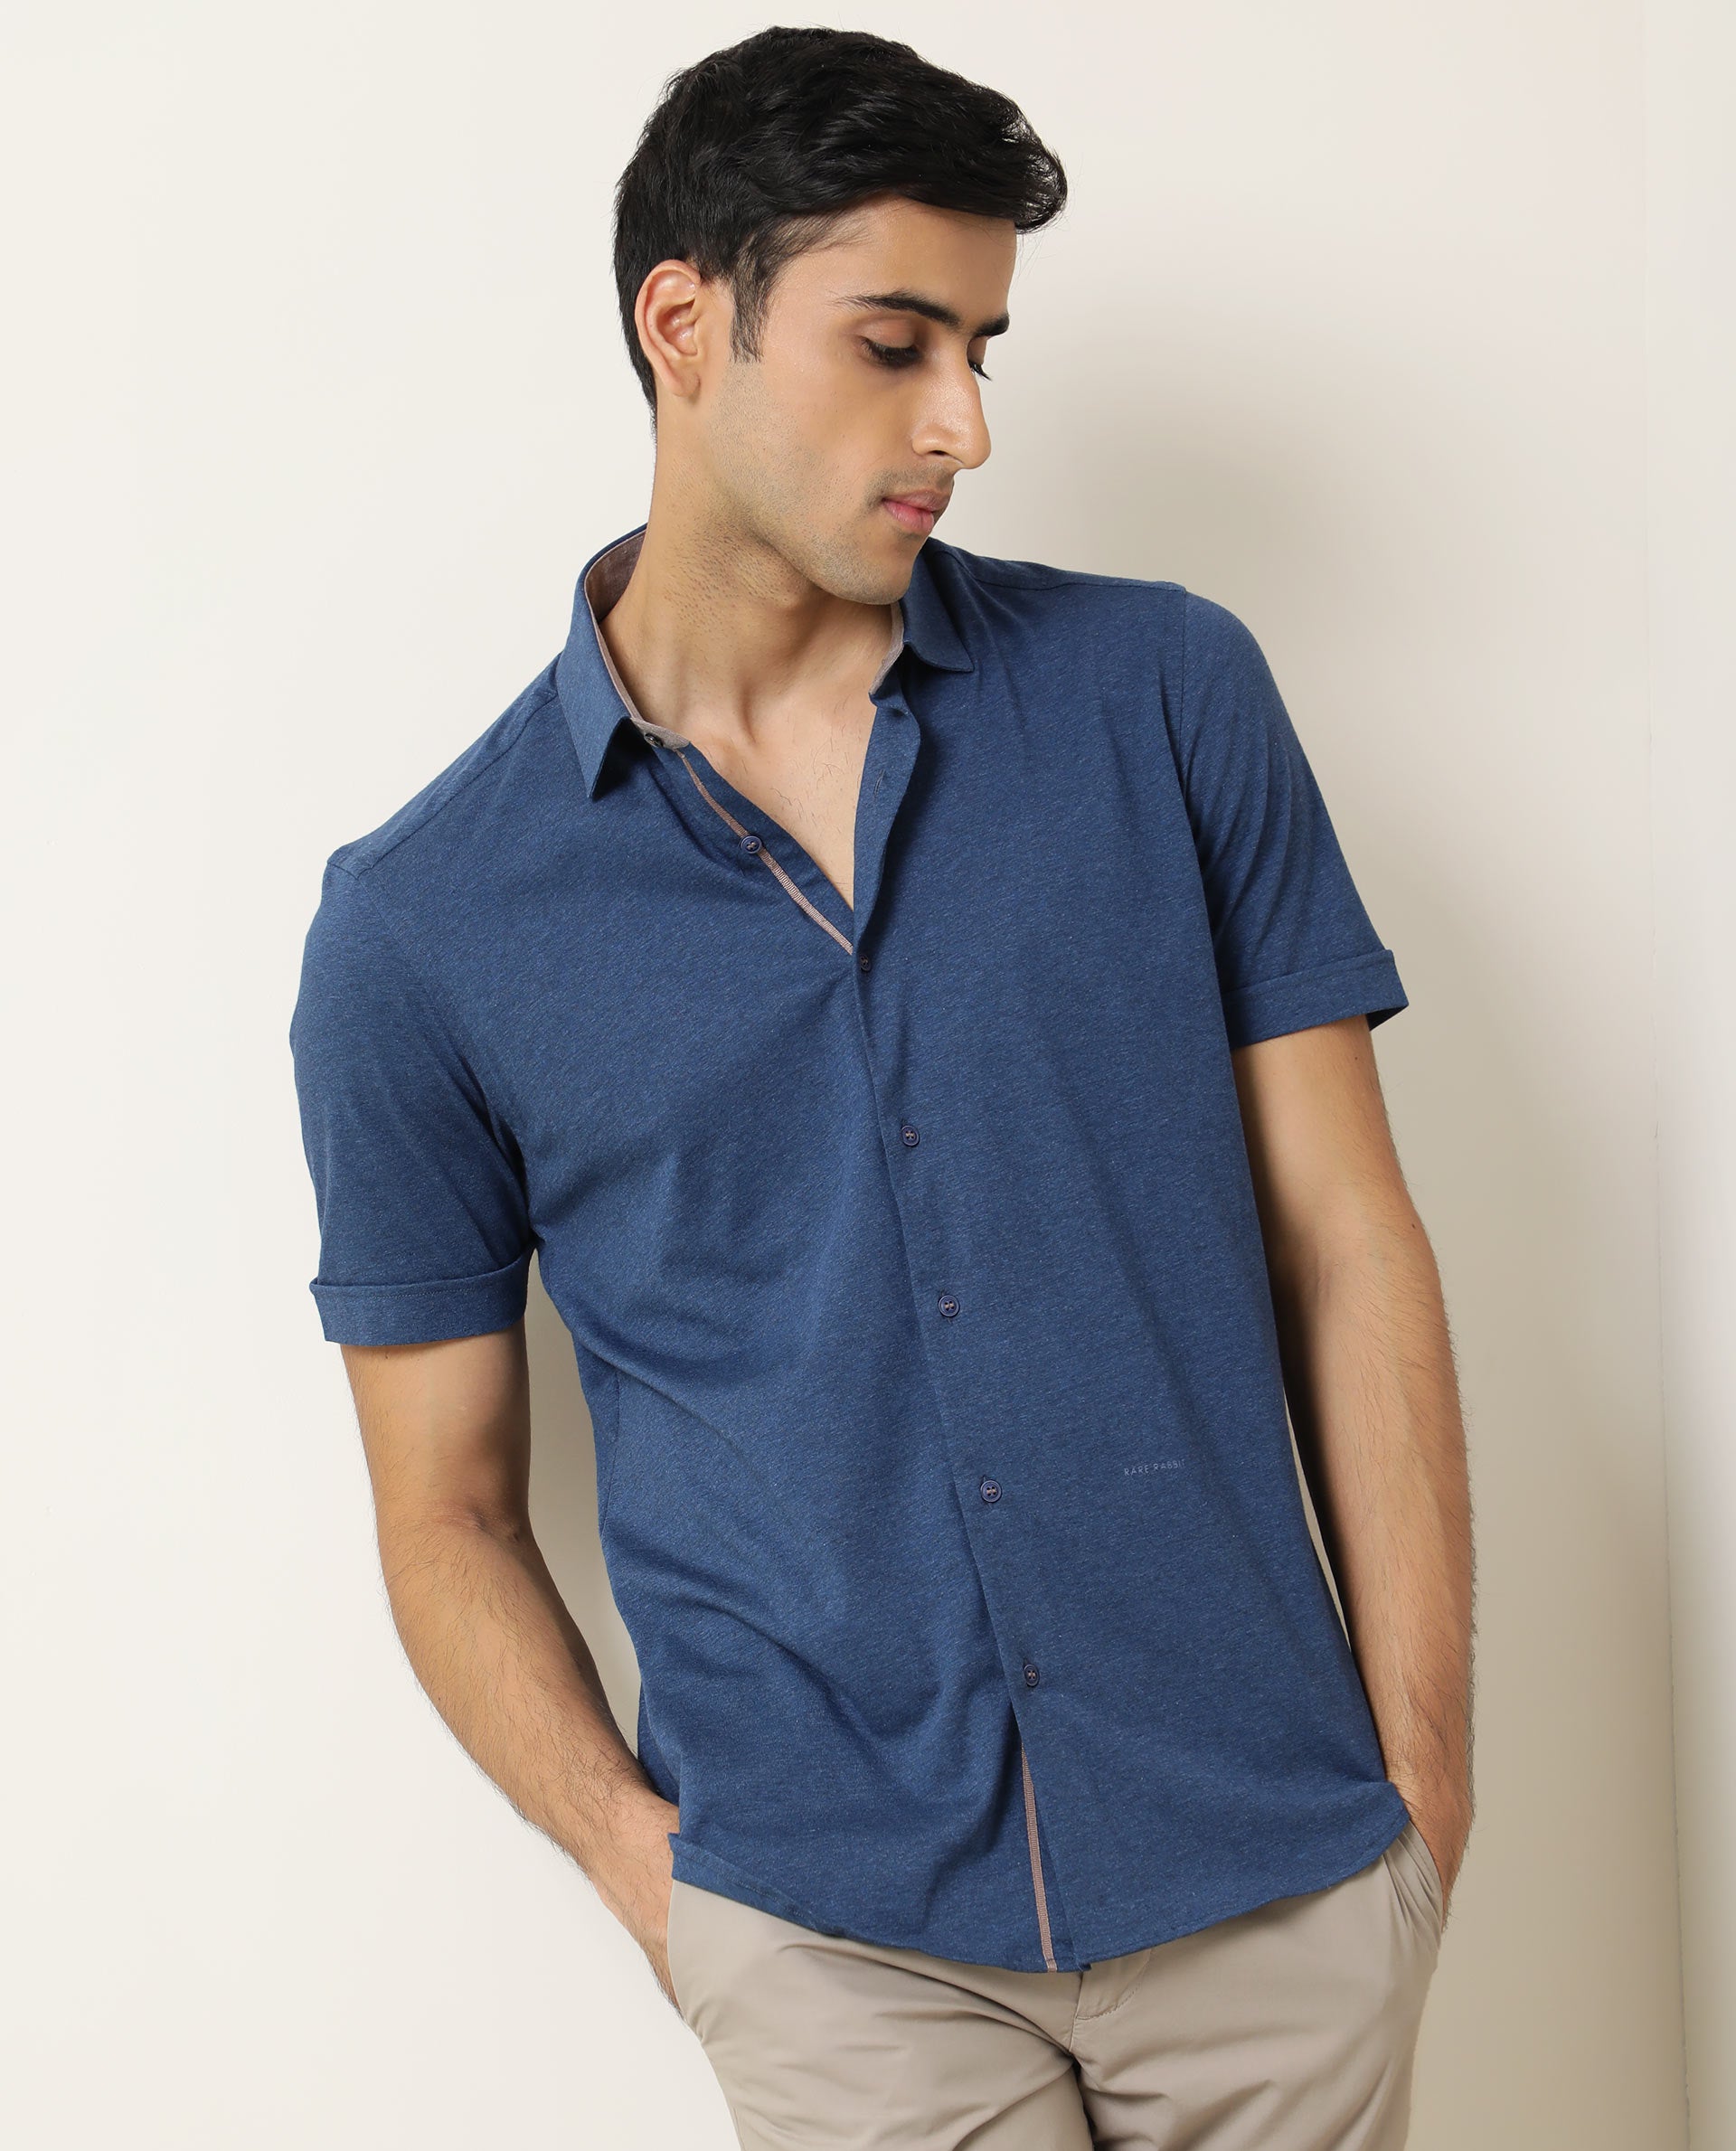 Must Haves Formal Sky Blue Textured Shirt - Samuel